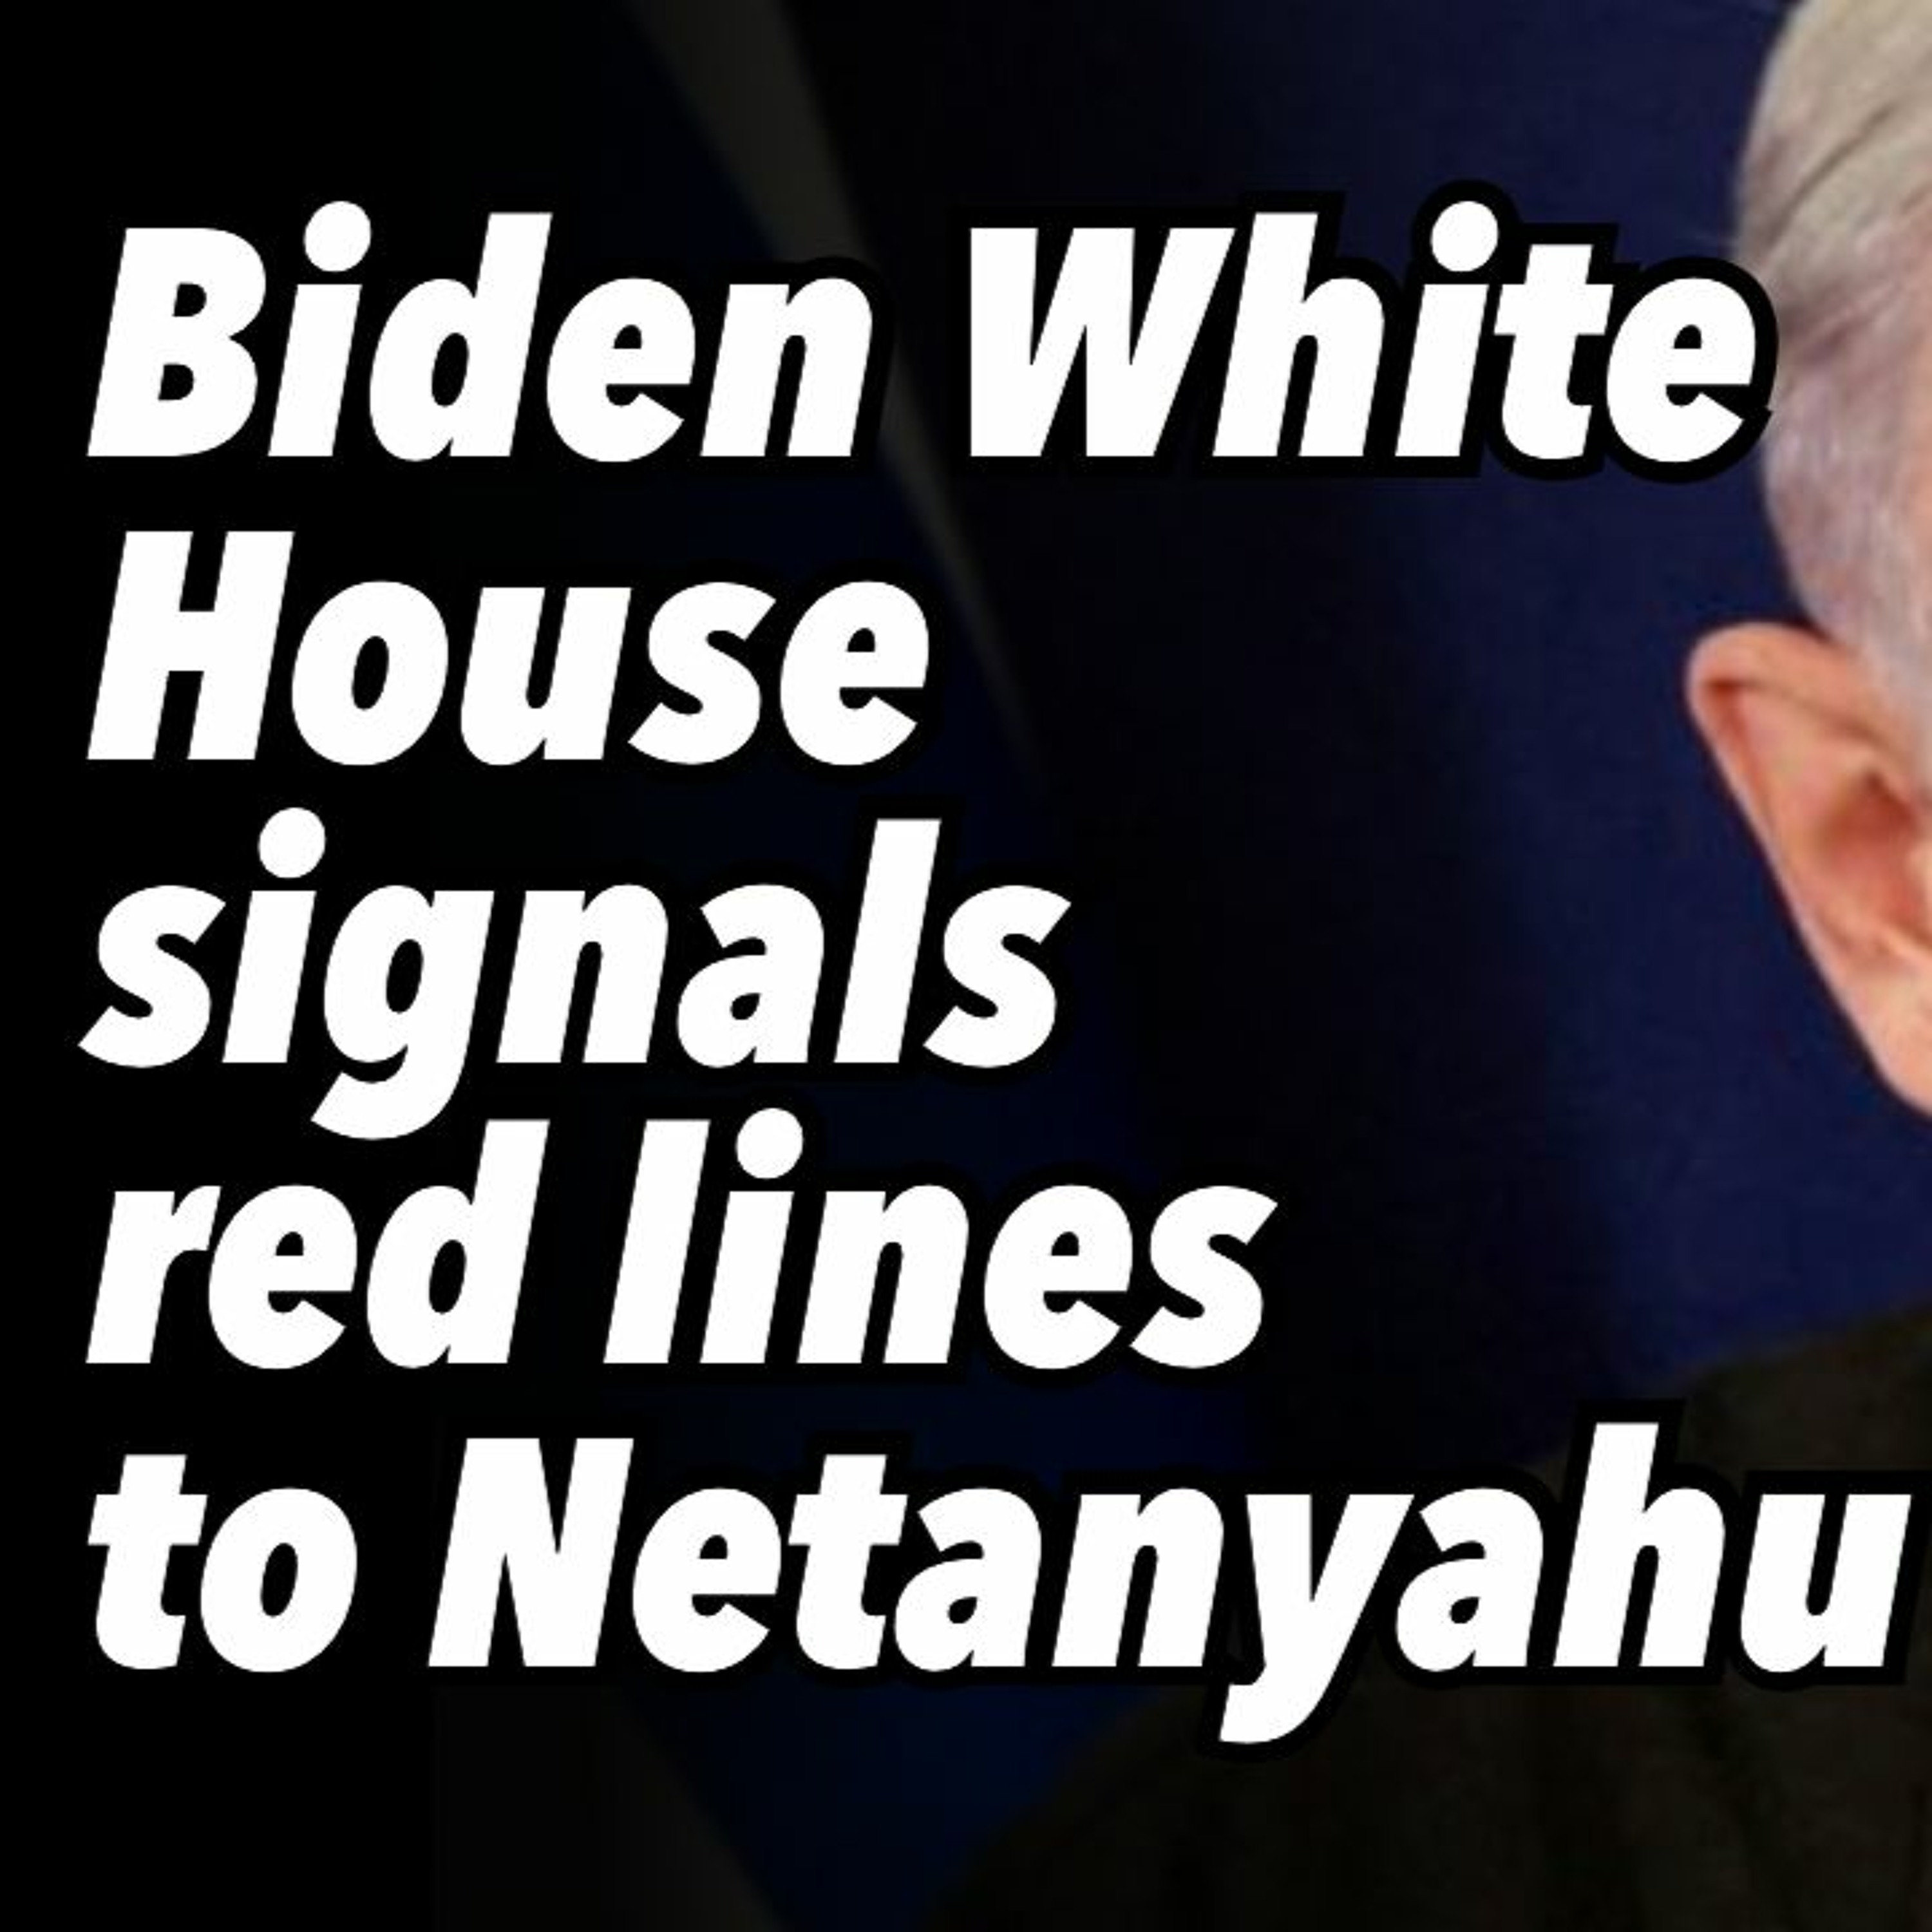 Biden White House signals red lines to Netanyahu